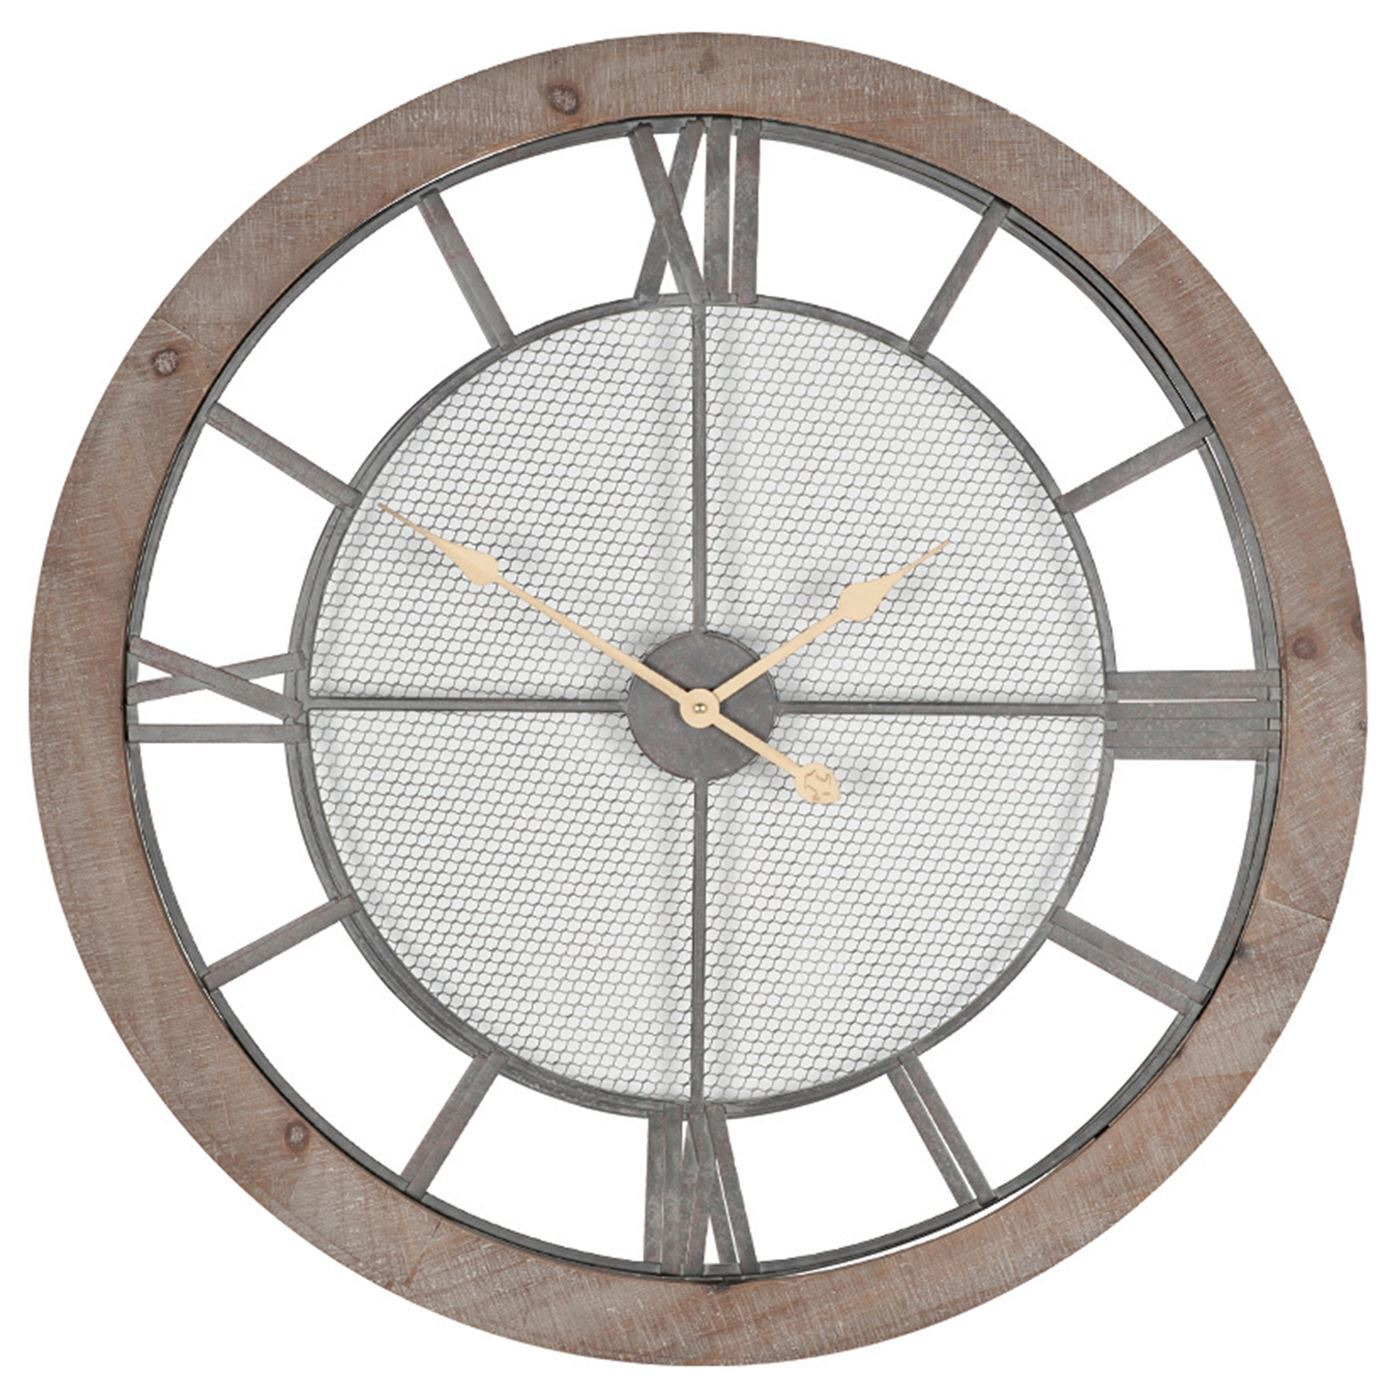 Nat Wood Rnd Wall Clock, Round, Neutral - Barker & Stonehouse - image 1